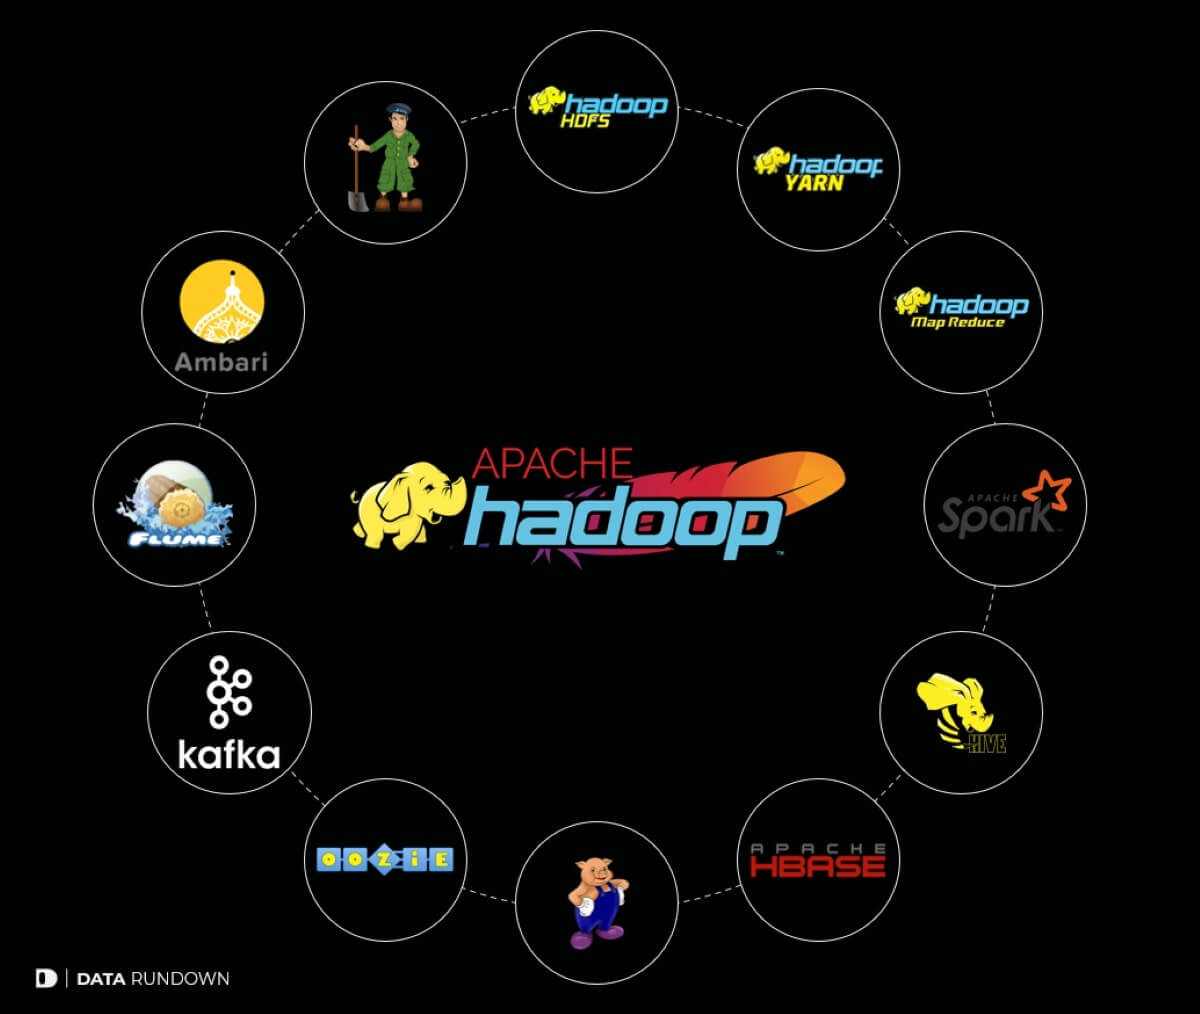 Apache Hadoop logos in a circular arrangement, showcasing the Hadoop ecosystem.